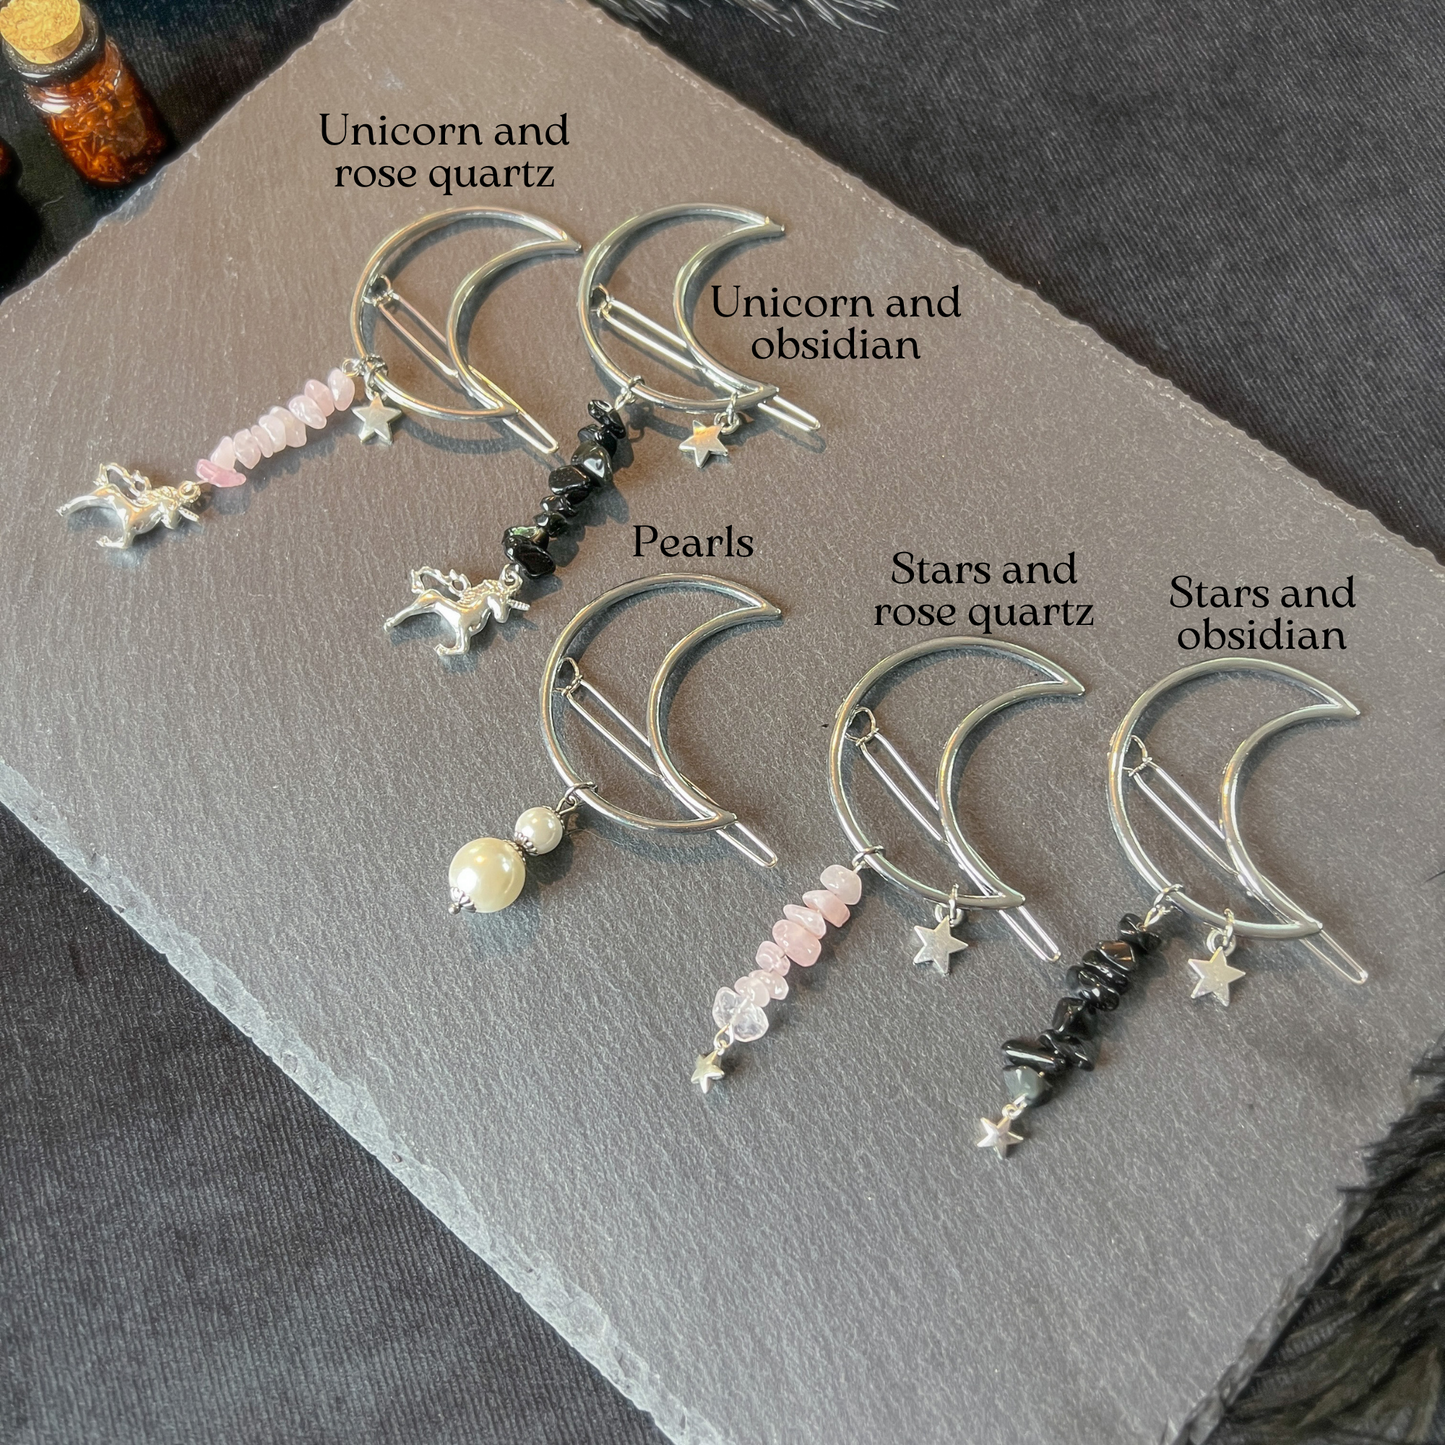 Moonlight Mountain Designs on X: Little rose quartz roach clip